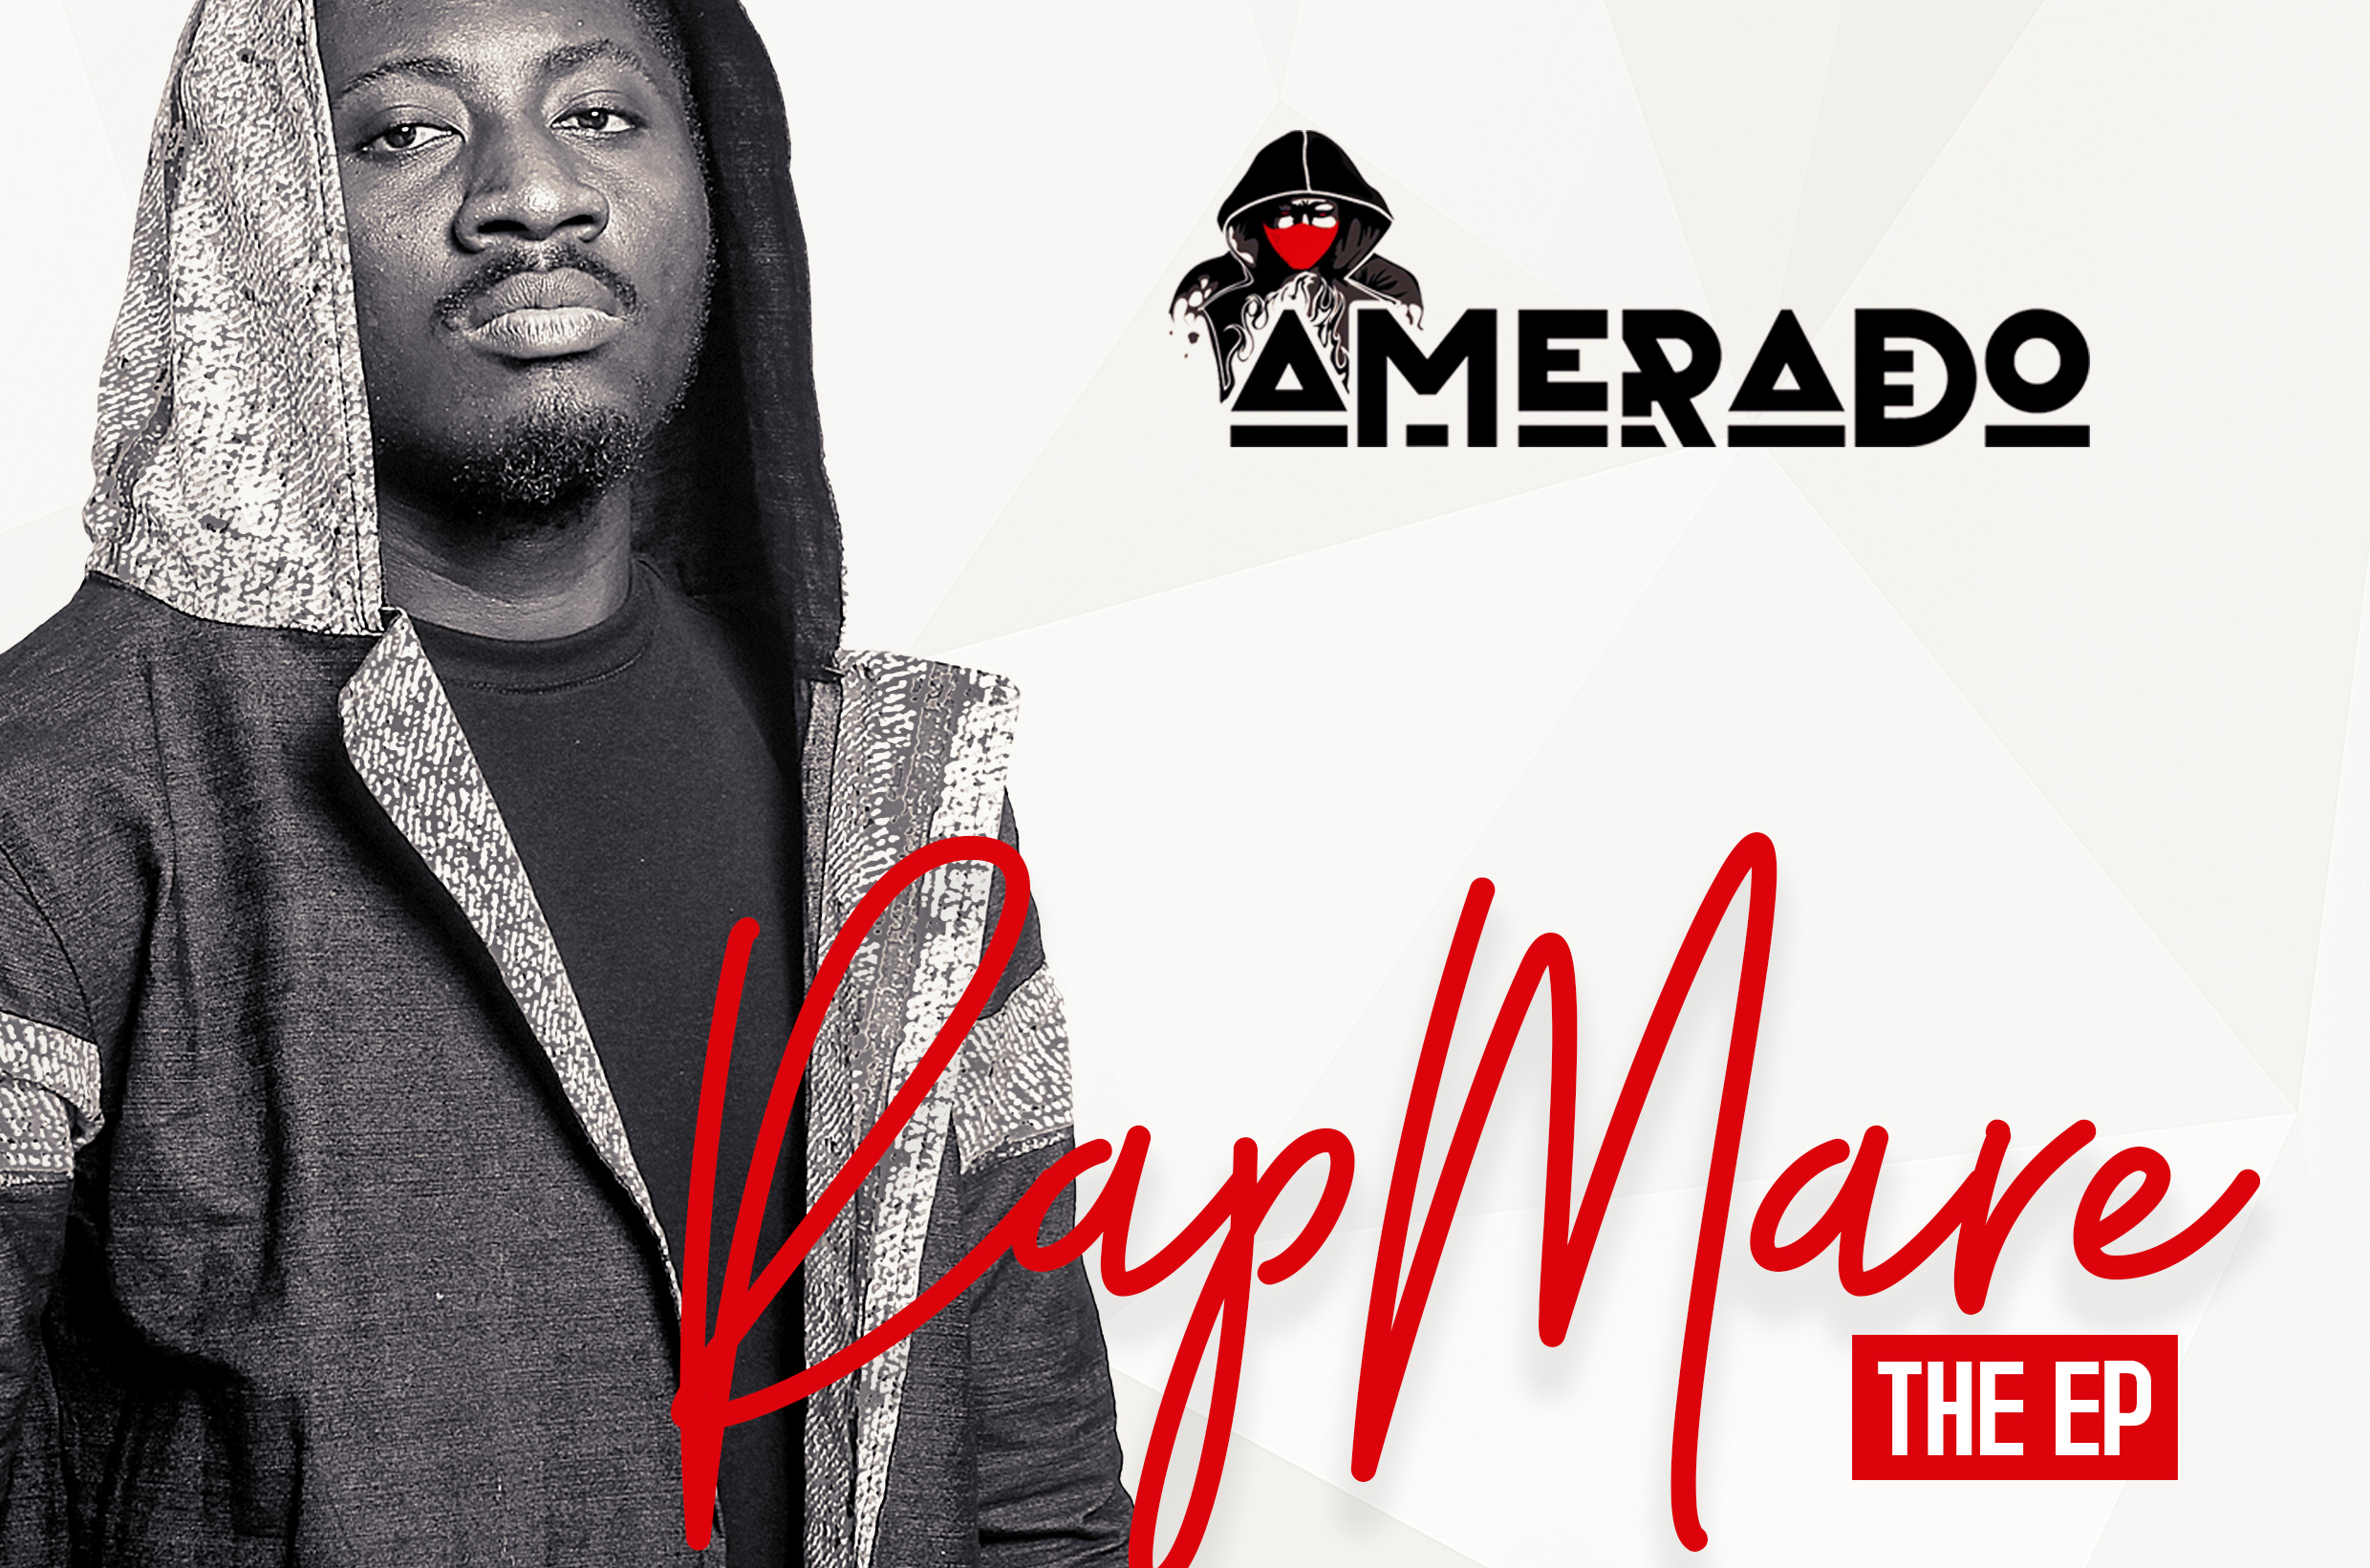 Amerad, Ghana Music, Rapmare EP